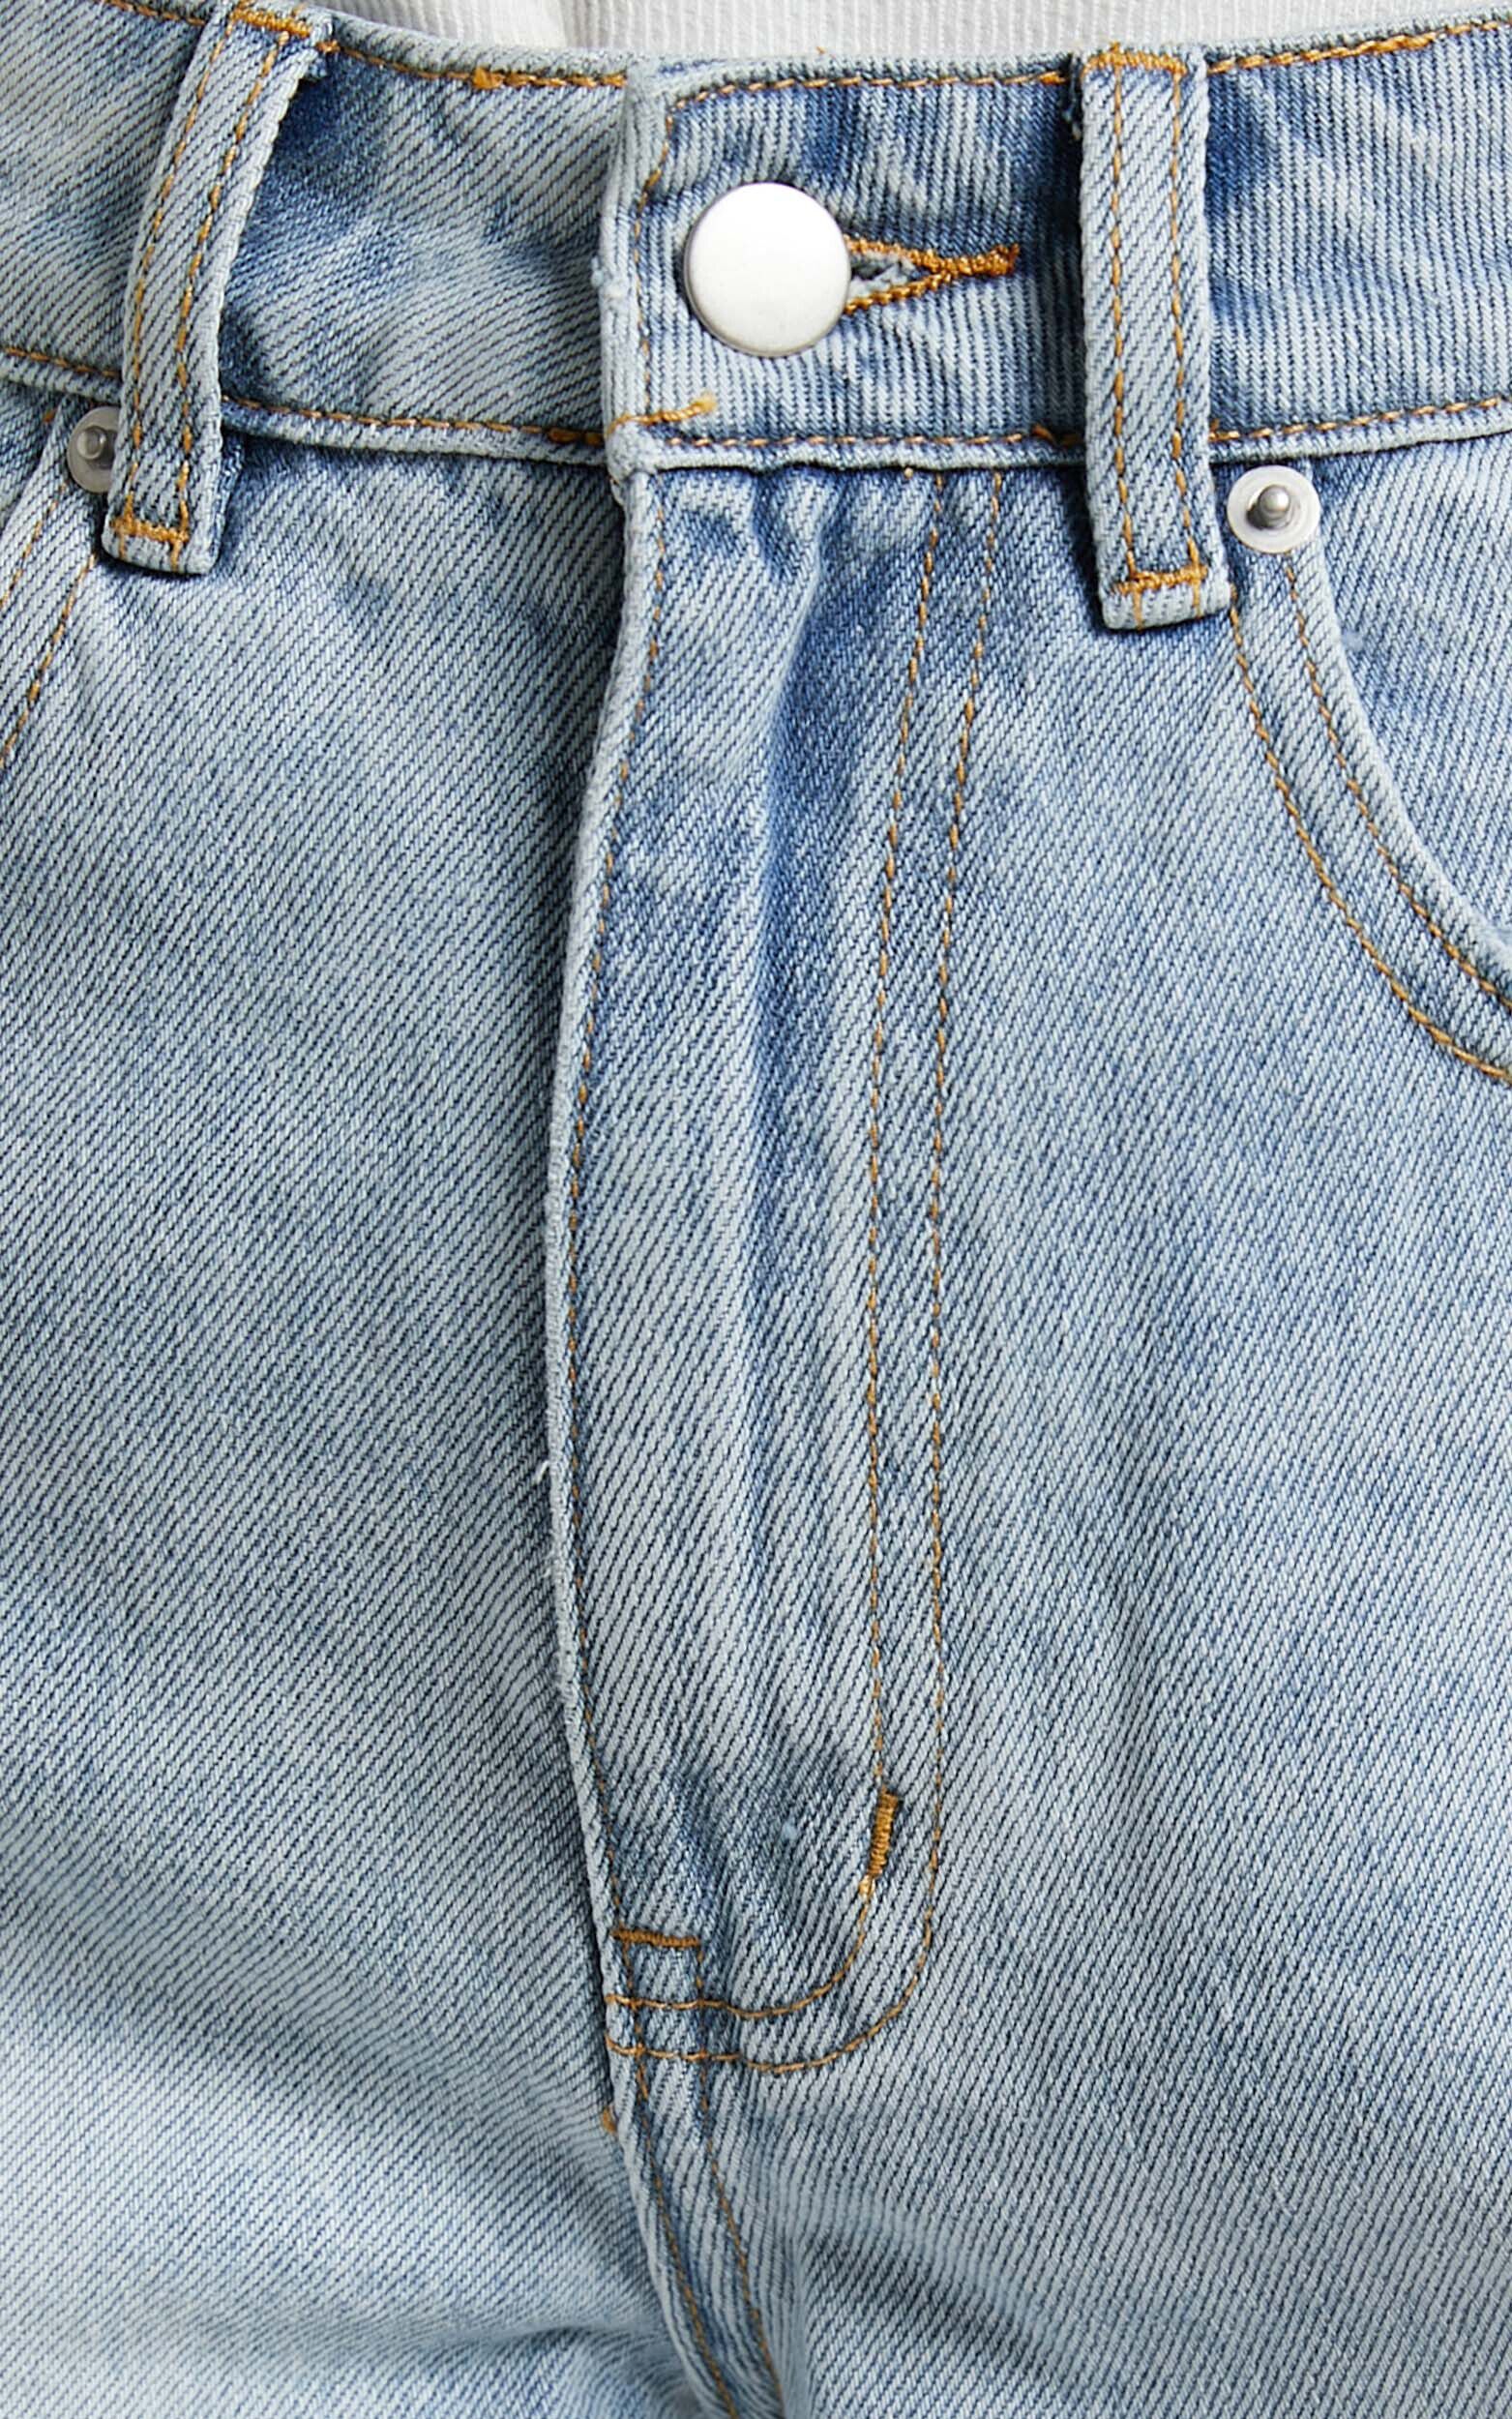 Eloisa Shorts - Recycled Cotton Raw Hem Denim Shorts in Mid Blue